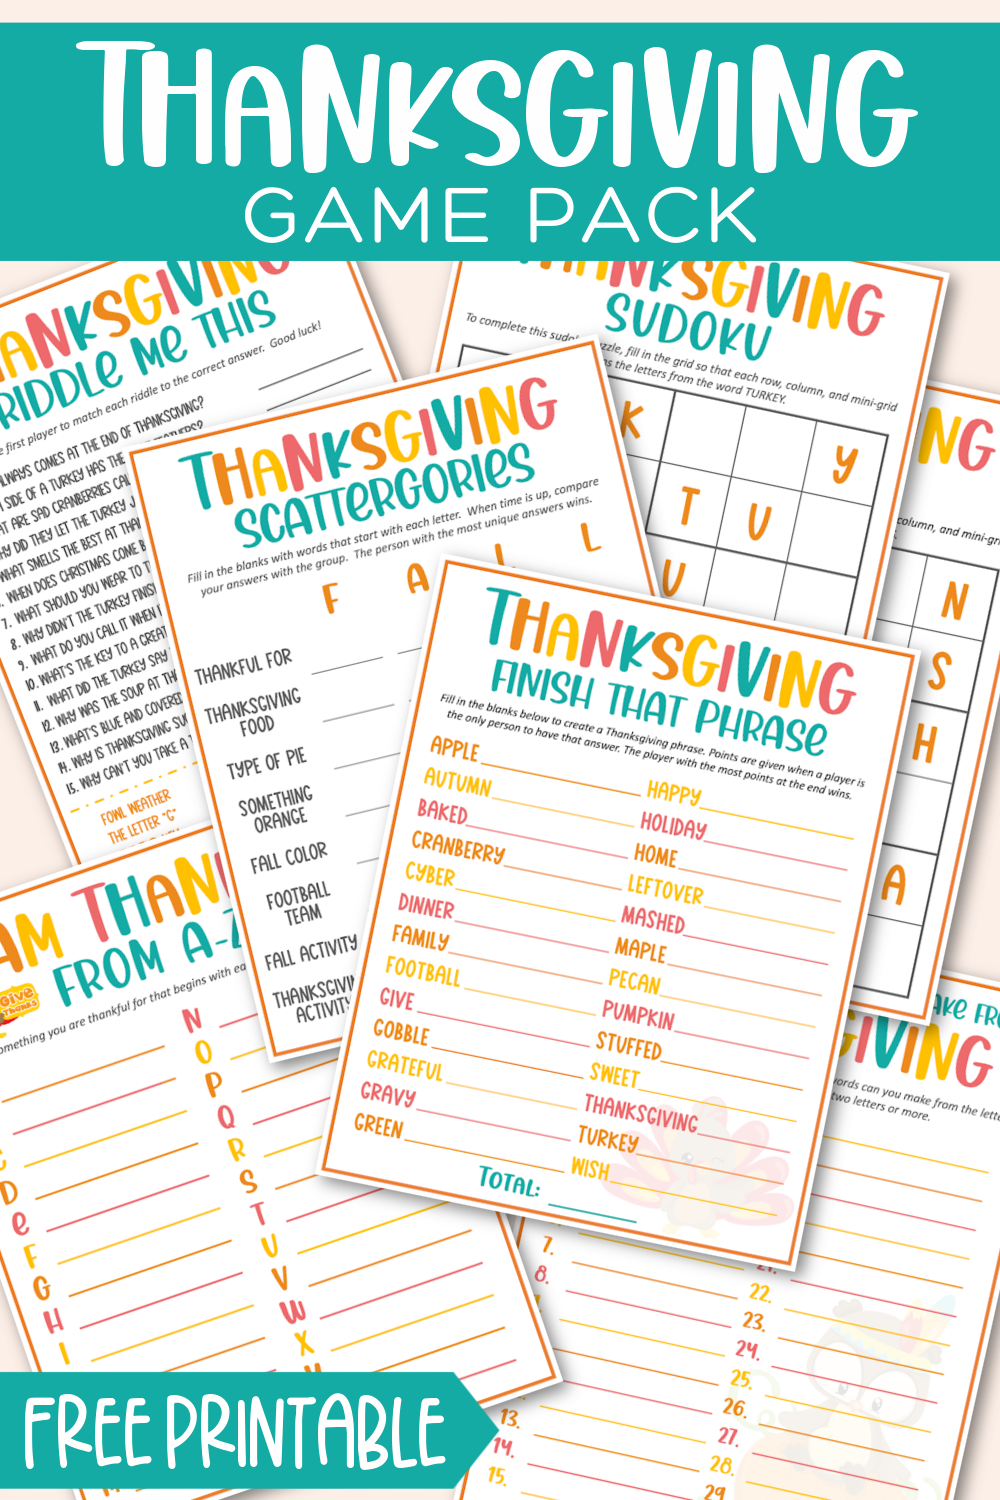 Printable Thanksgiving Game Pack